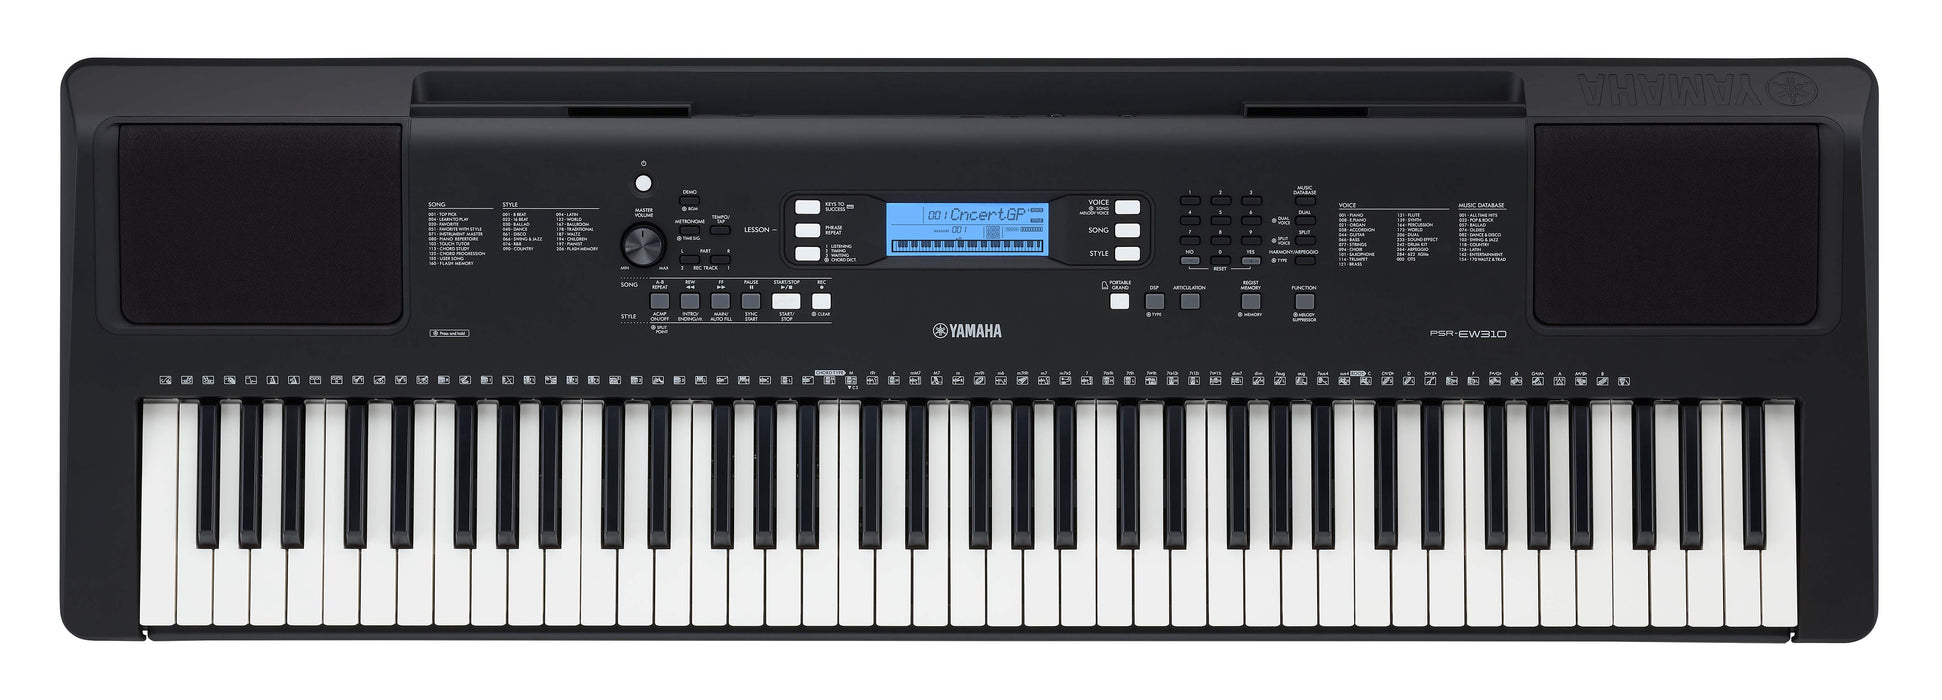 Yamaha PSREW310 76 Key Portable Keyboard - Black